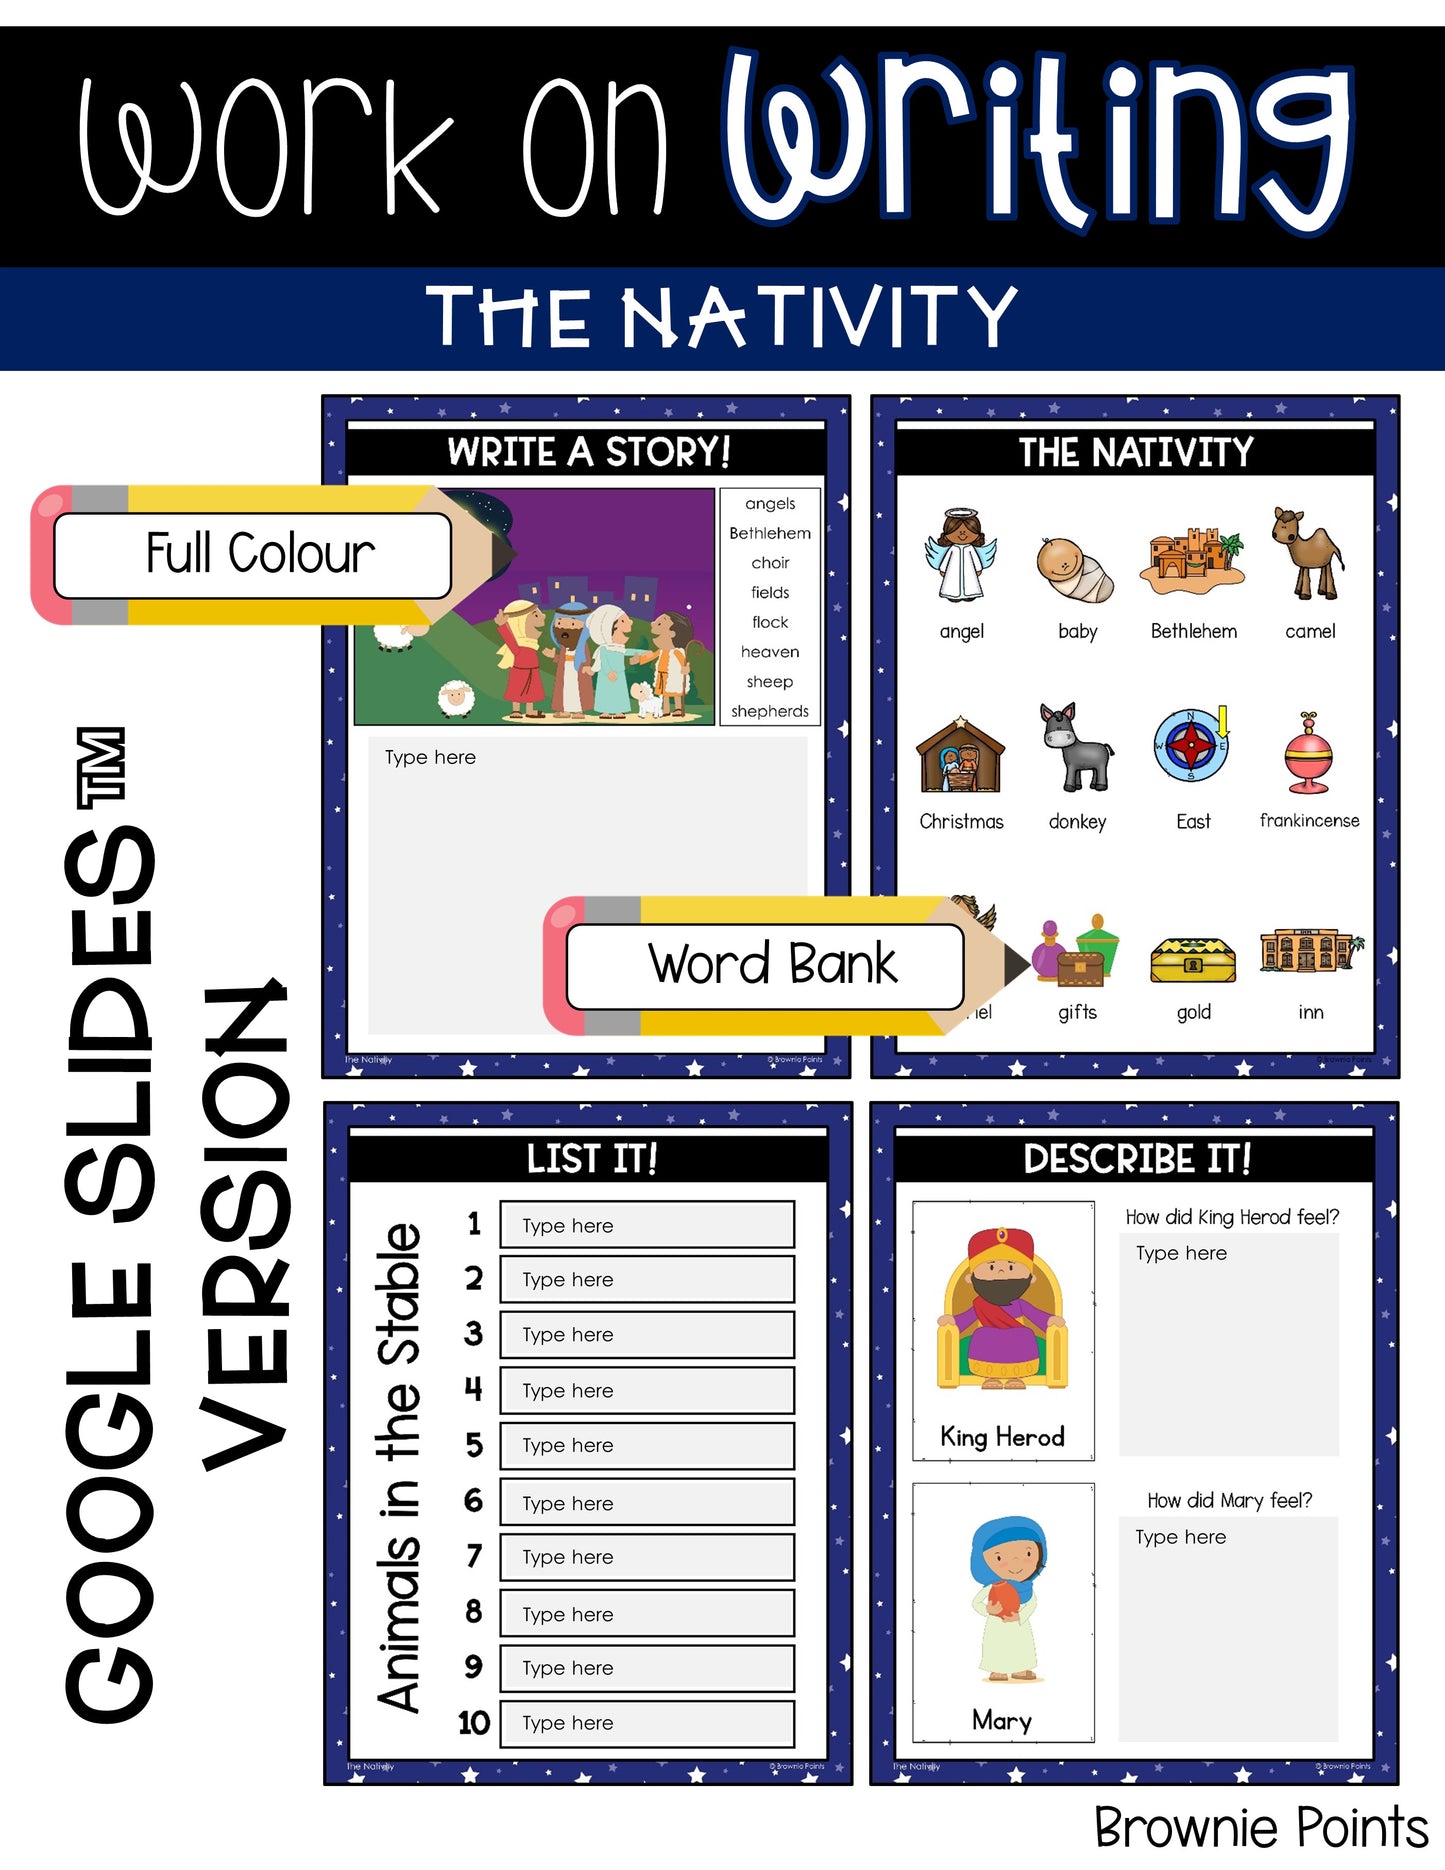 Work on Writing - The Nativity